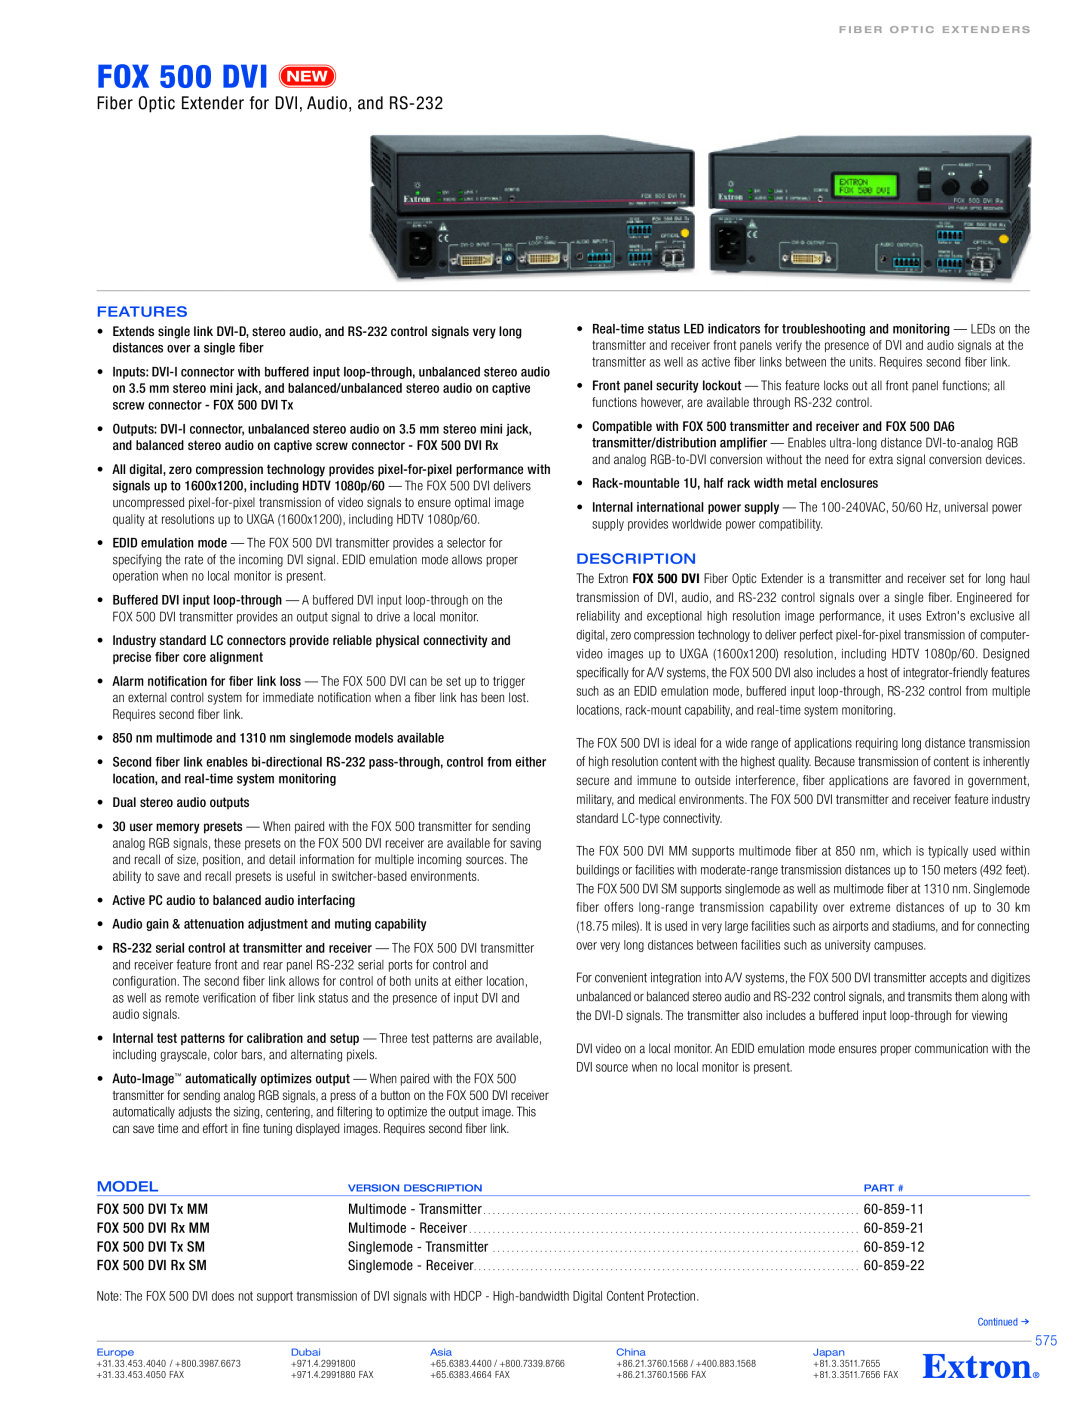 Extron electronic FOX 500 DVI specifications Features, Description, Model, Fiber Optic Extender for DVI, Audio, and RS-232 